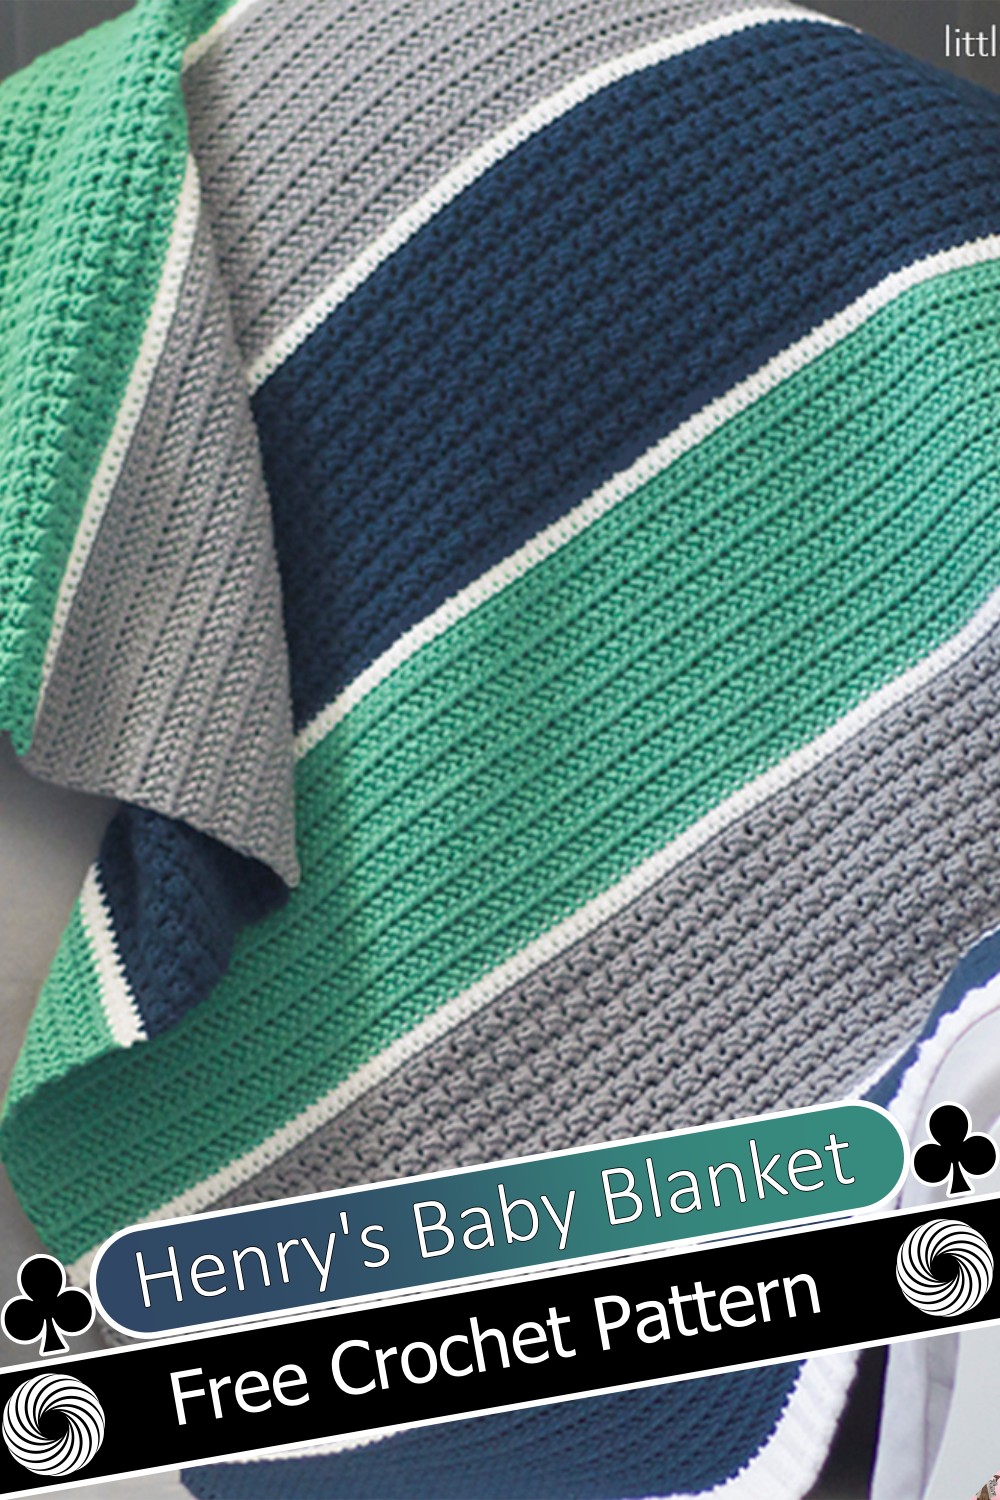 Henry's Baby Blanket